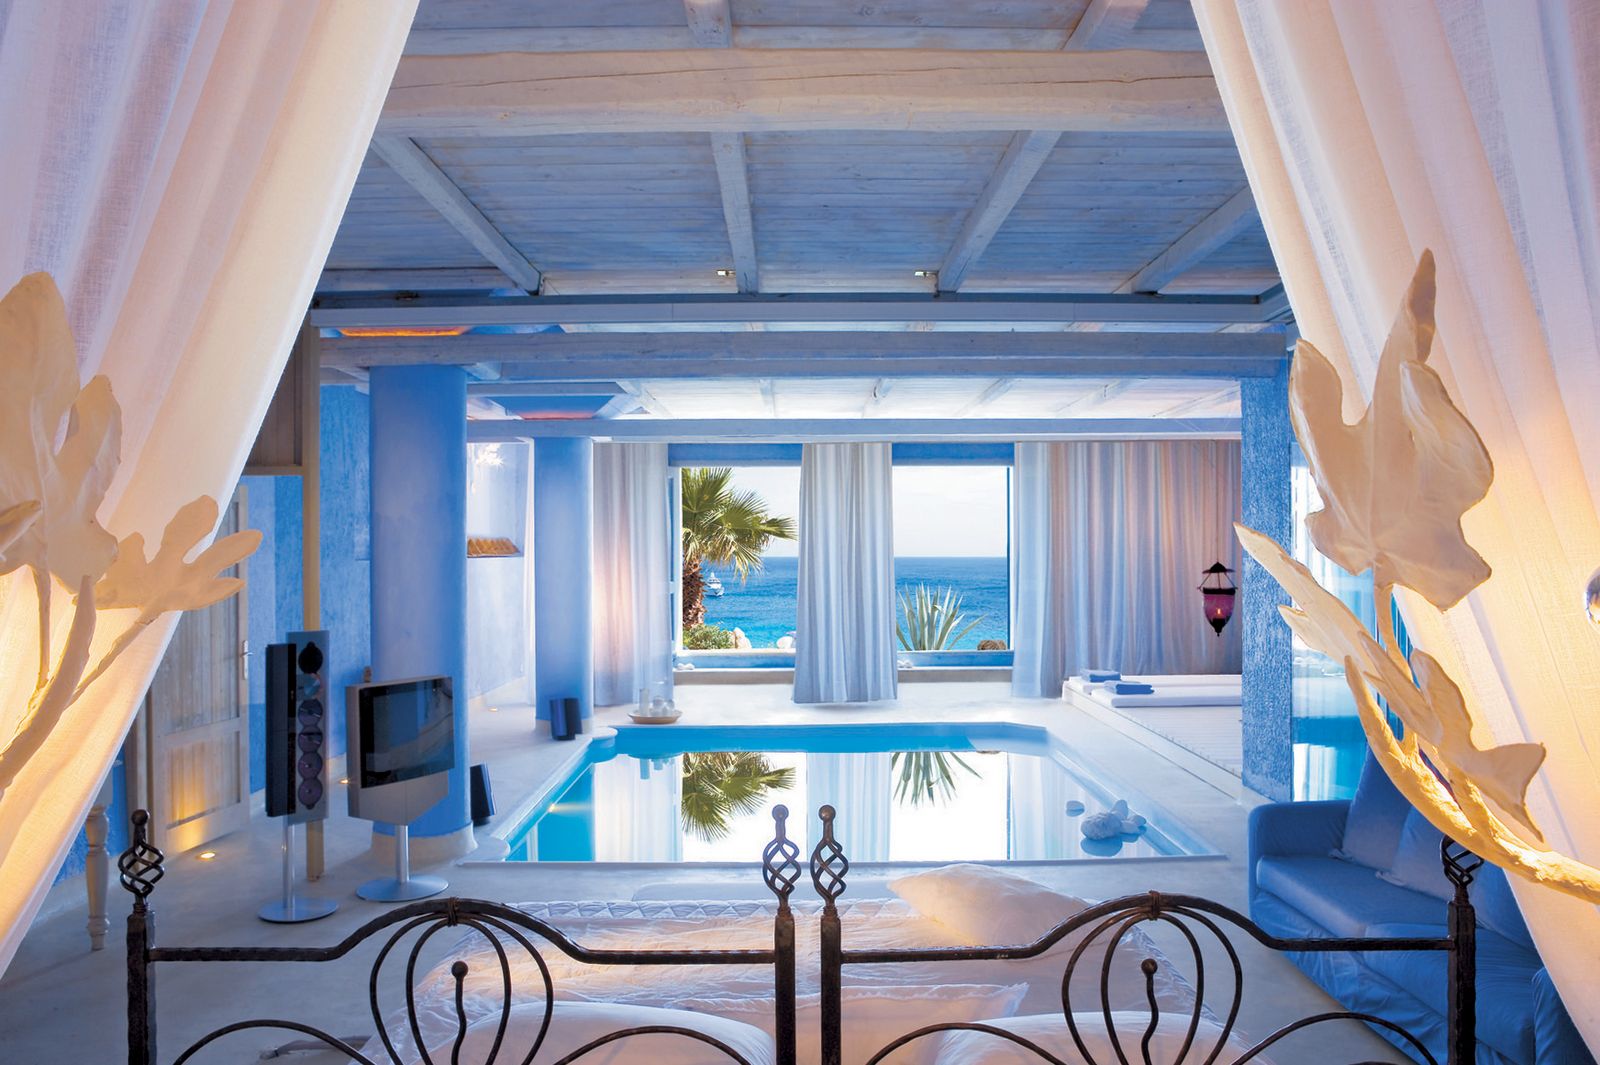 Bedroom with pool inside in Mykonos.